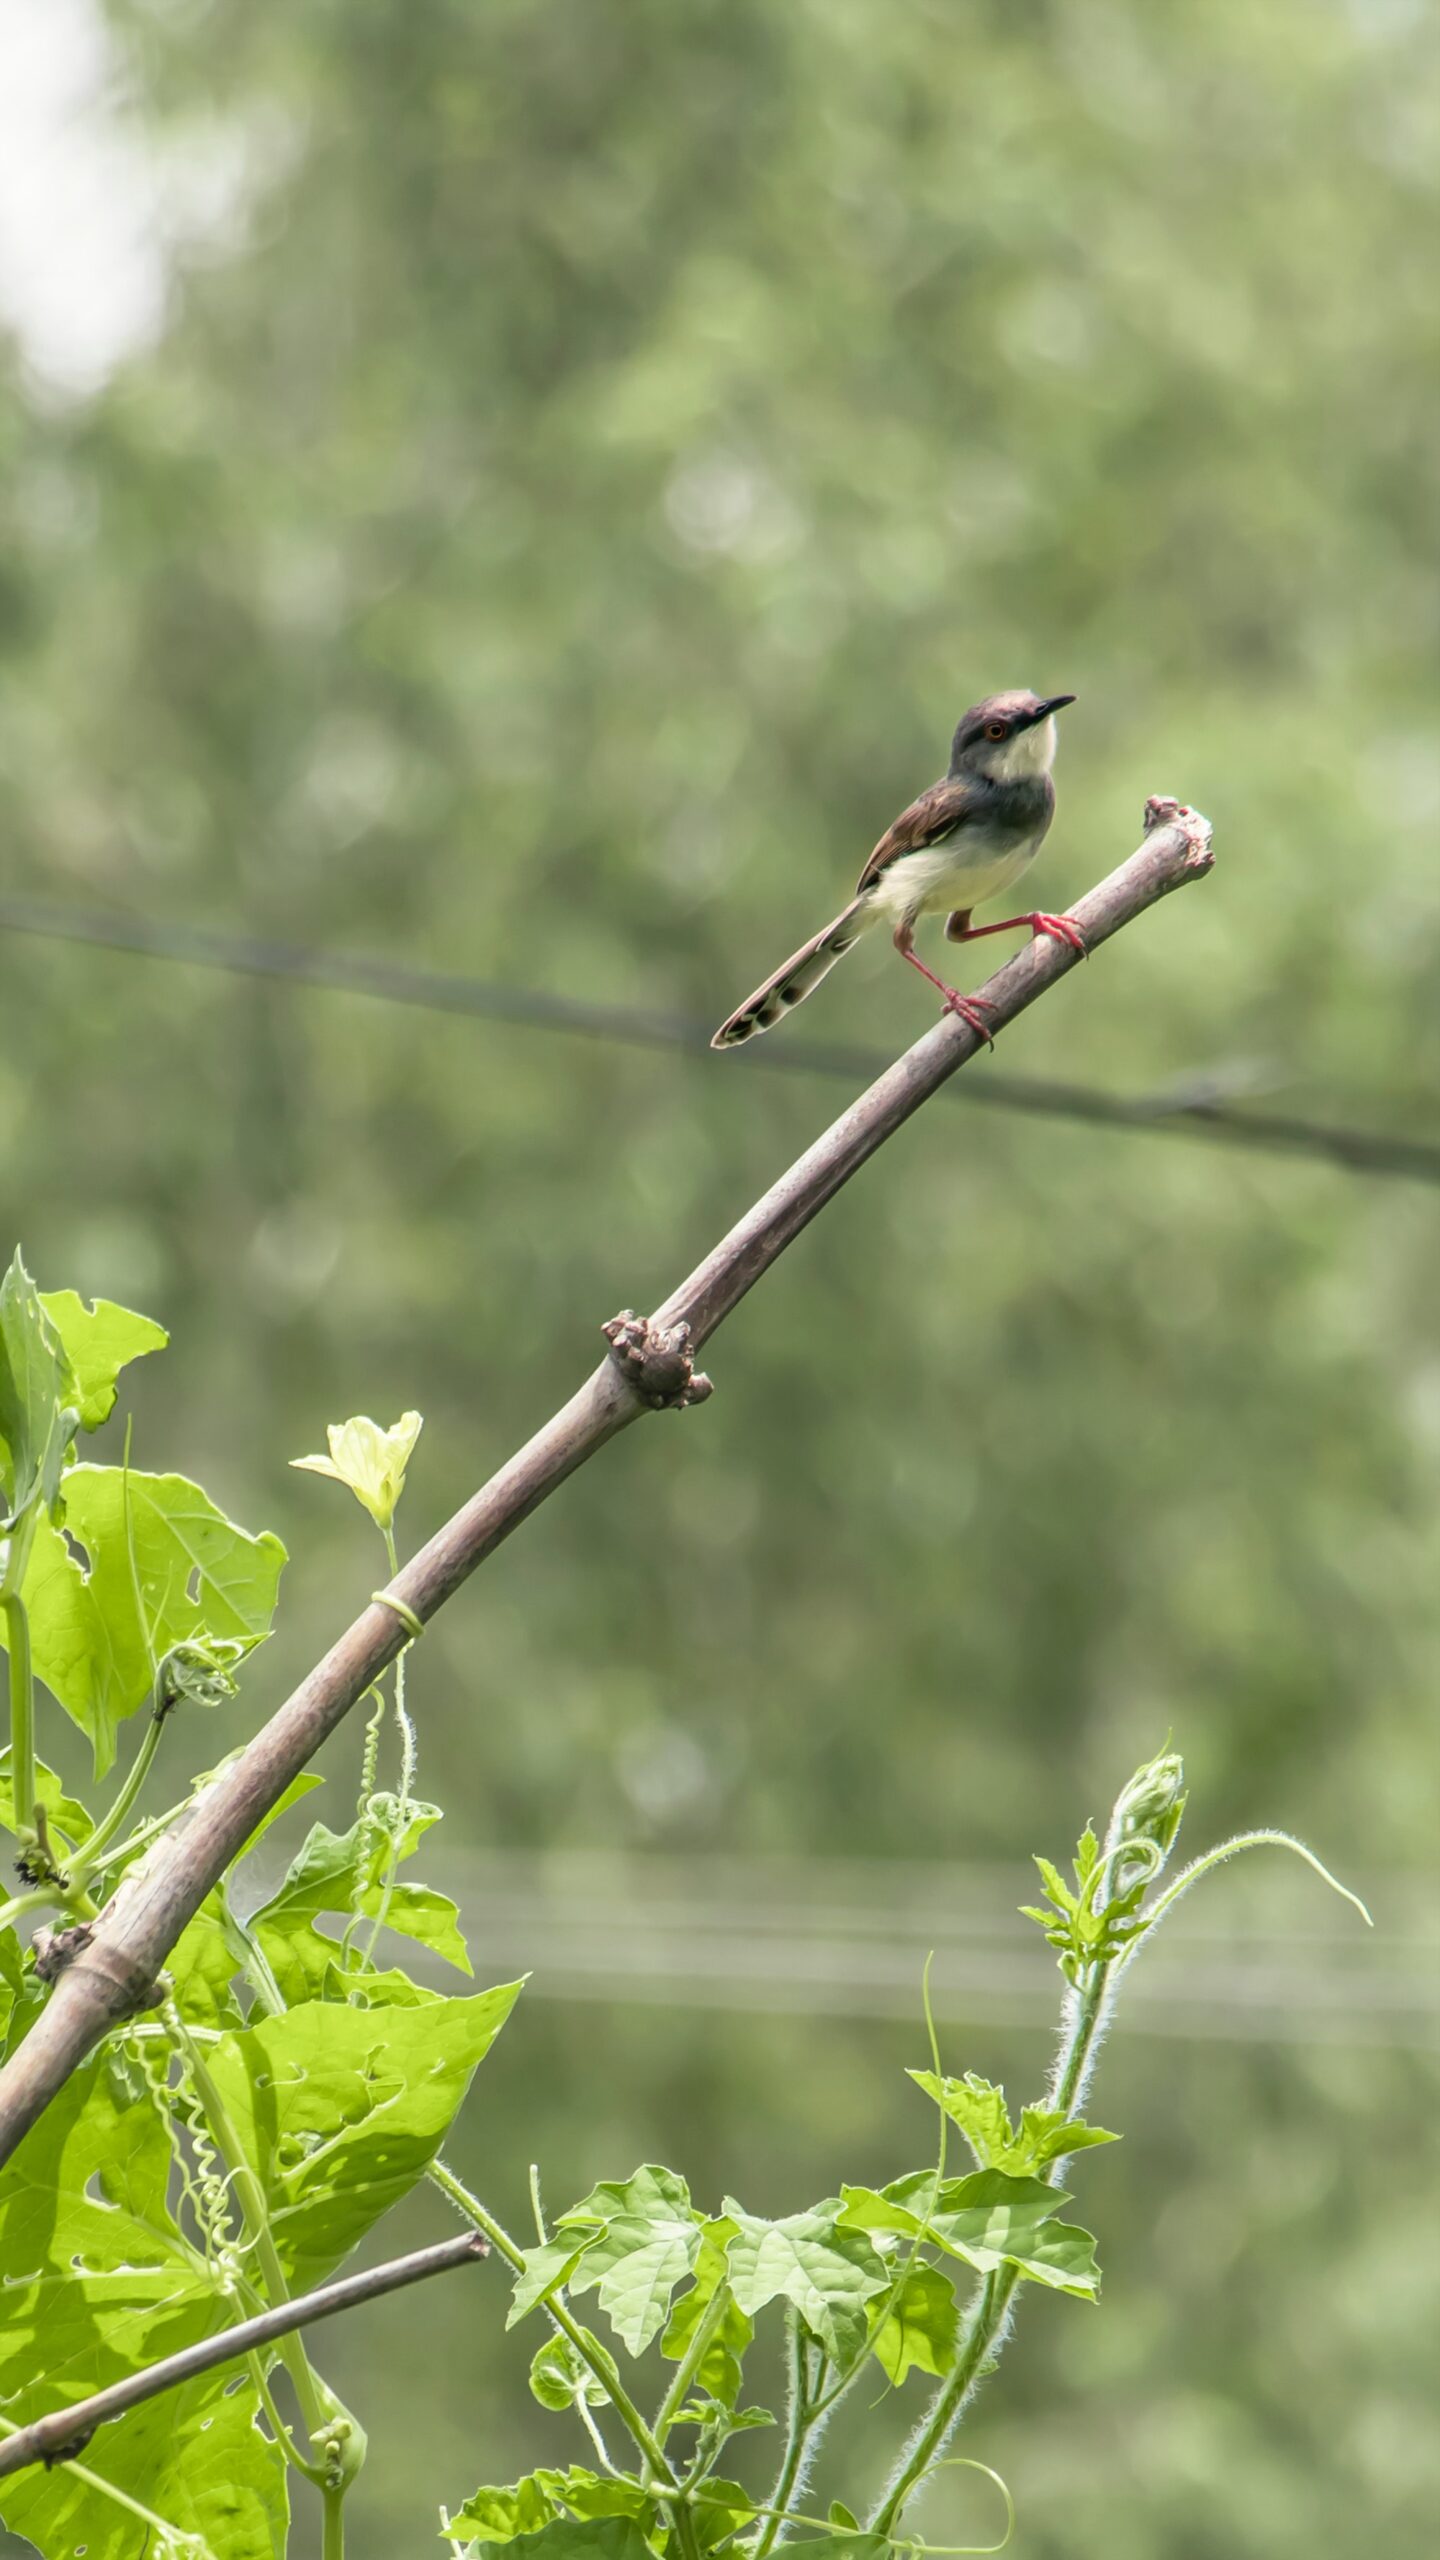 ghana-shyam-khadka-Bird on the tip of an extended branch-unsplash